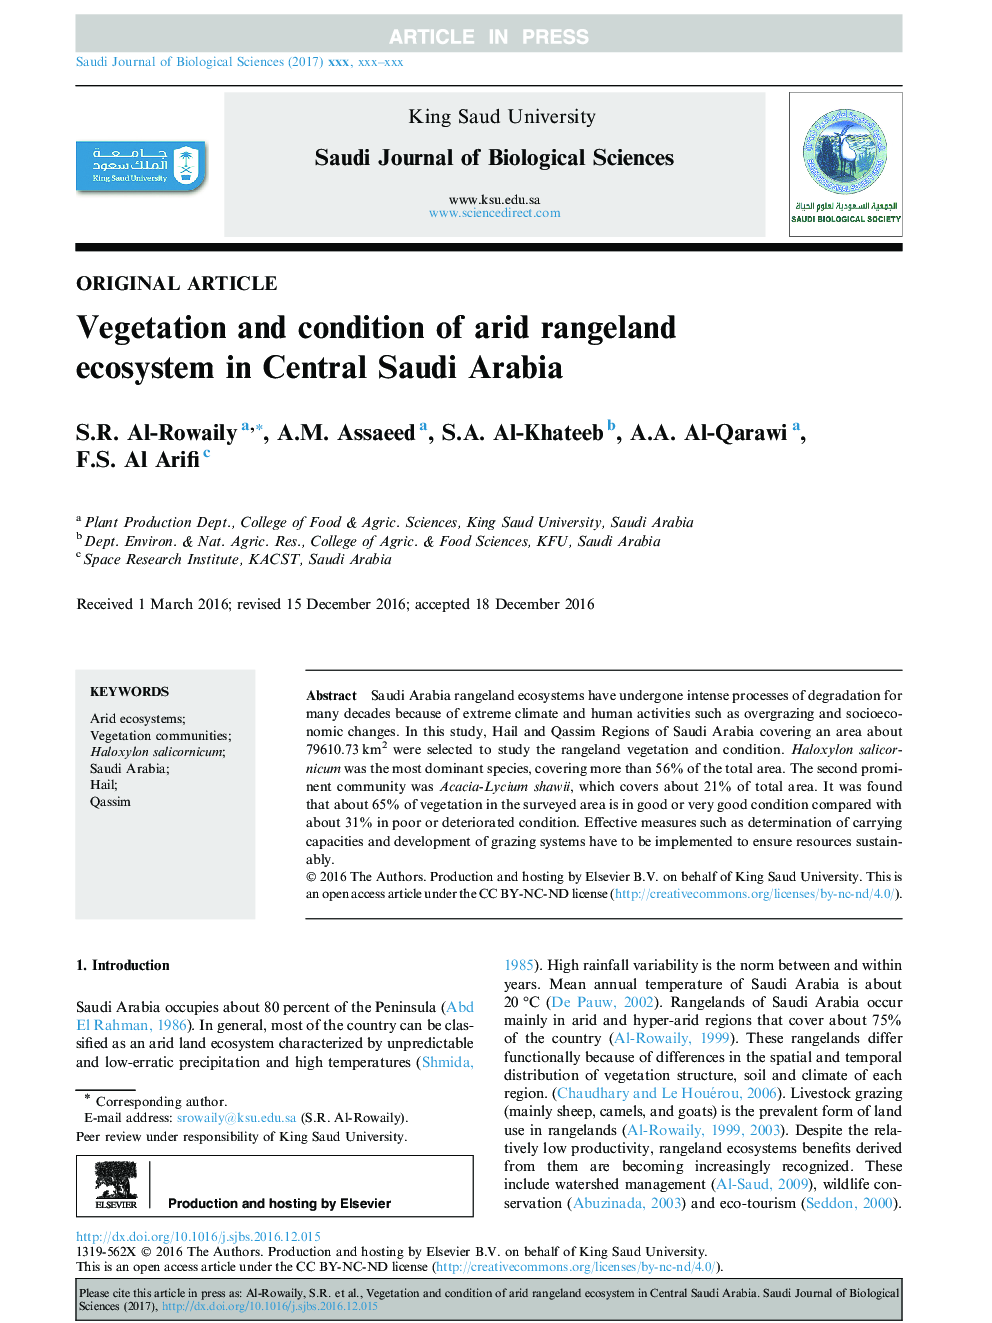 Vegetation and condition of arid rangeland ecosystem in Central Saudi Arabia